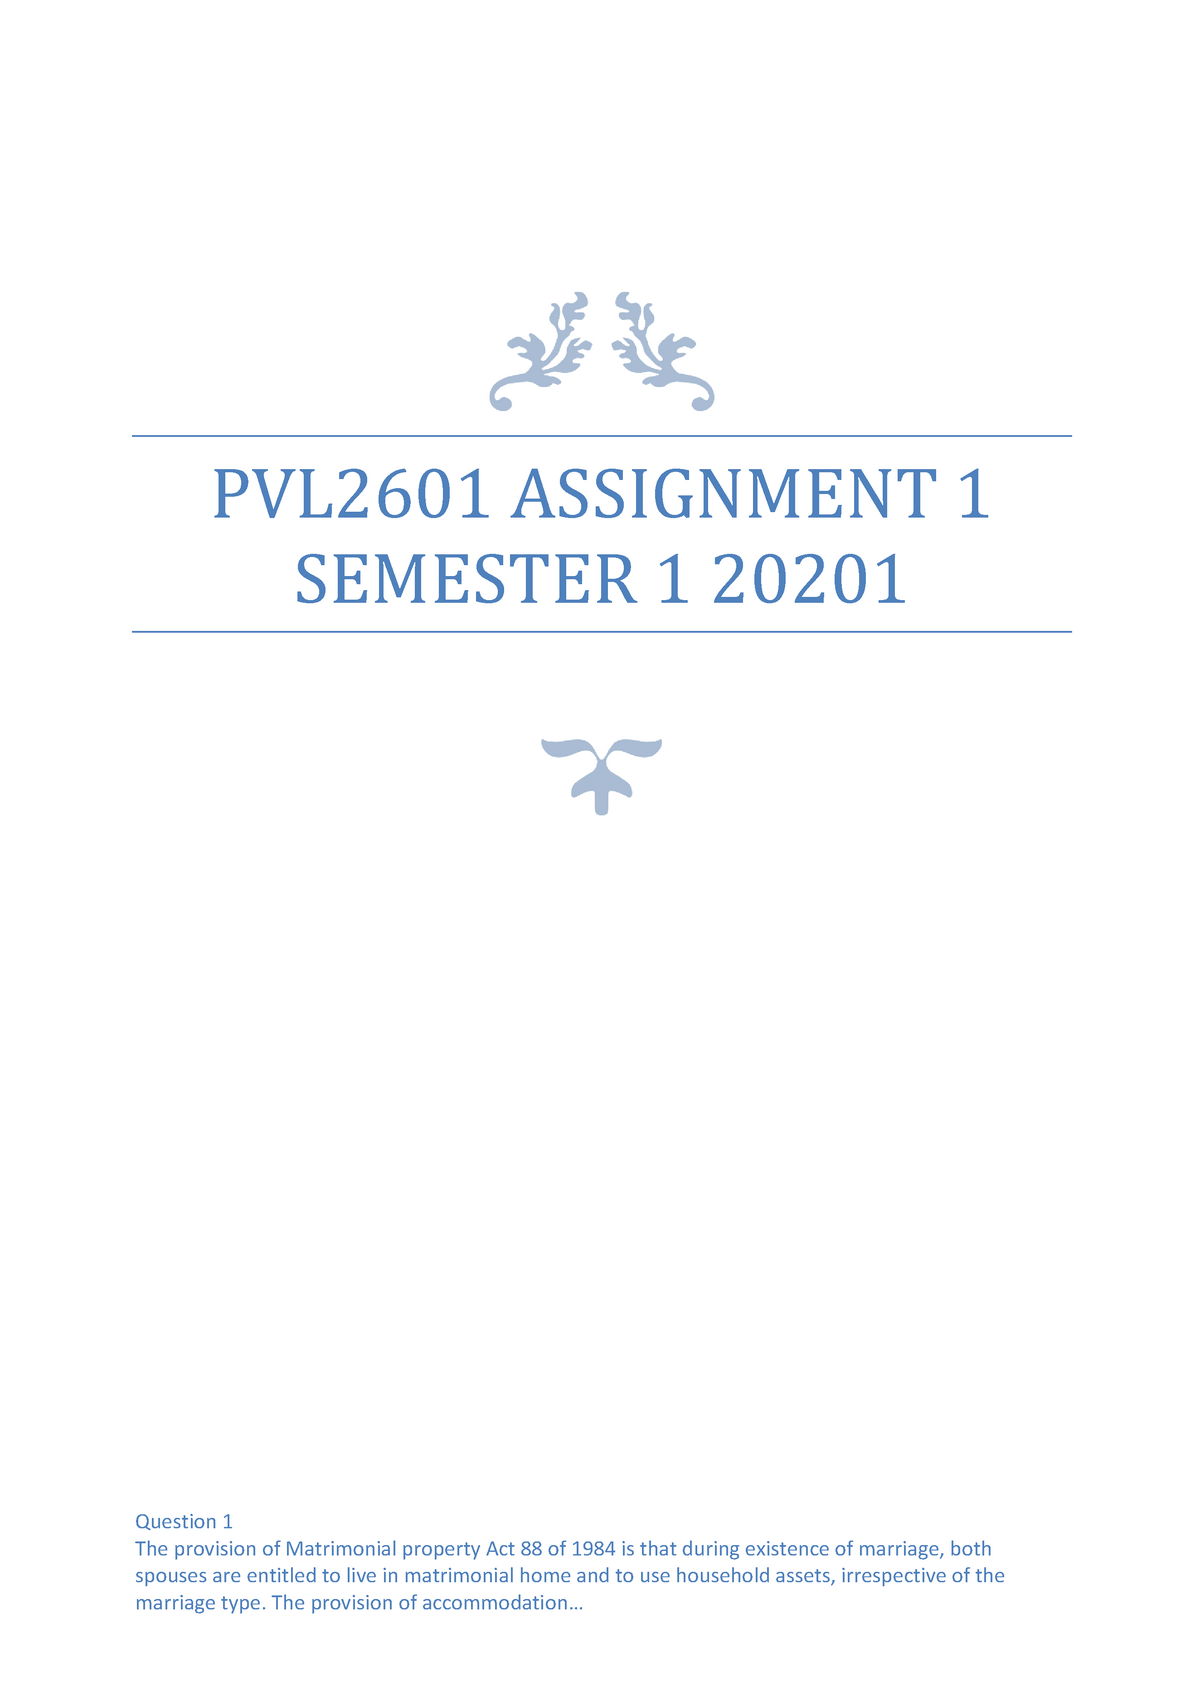 Pvl2601 First Semester Assignment 1 2021 Pvl2601 Assignment 1 Semester 1 20201 Question 1 The 